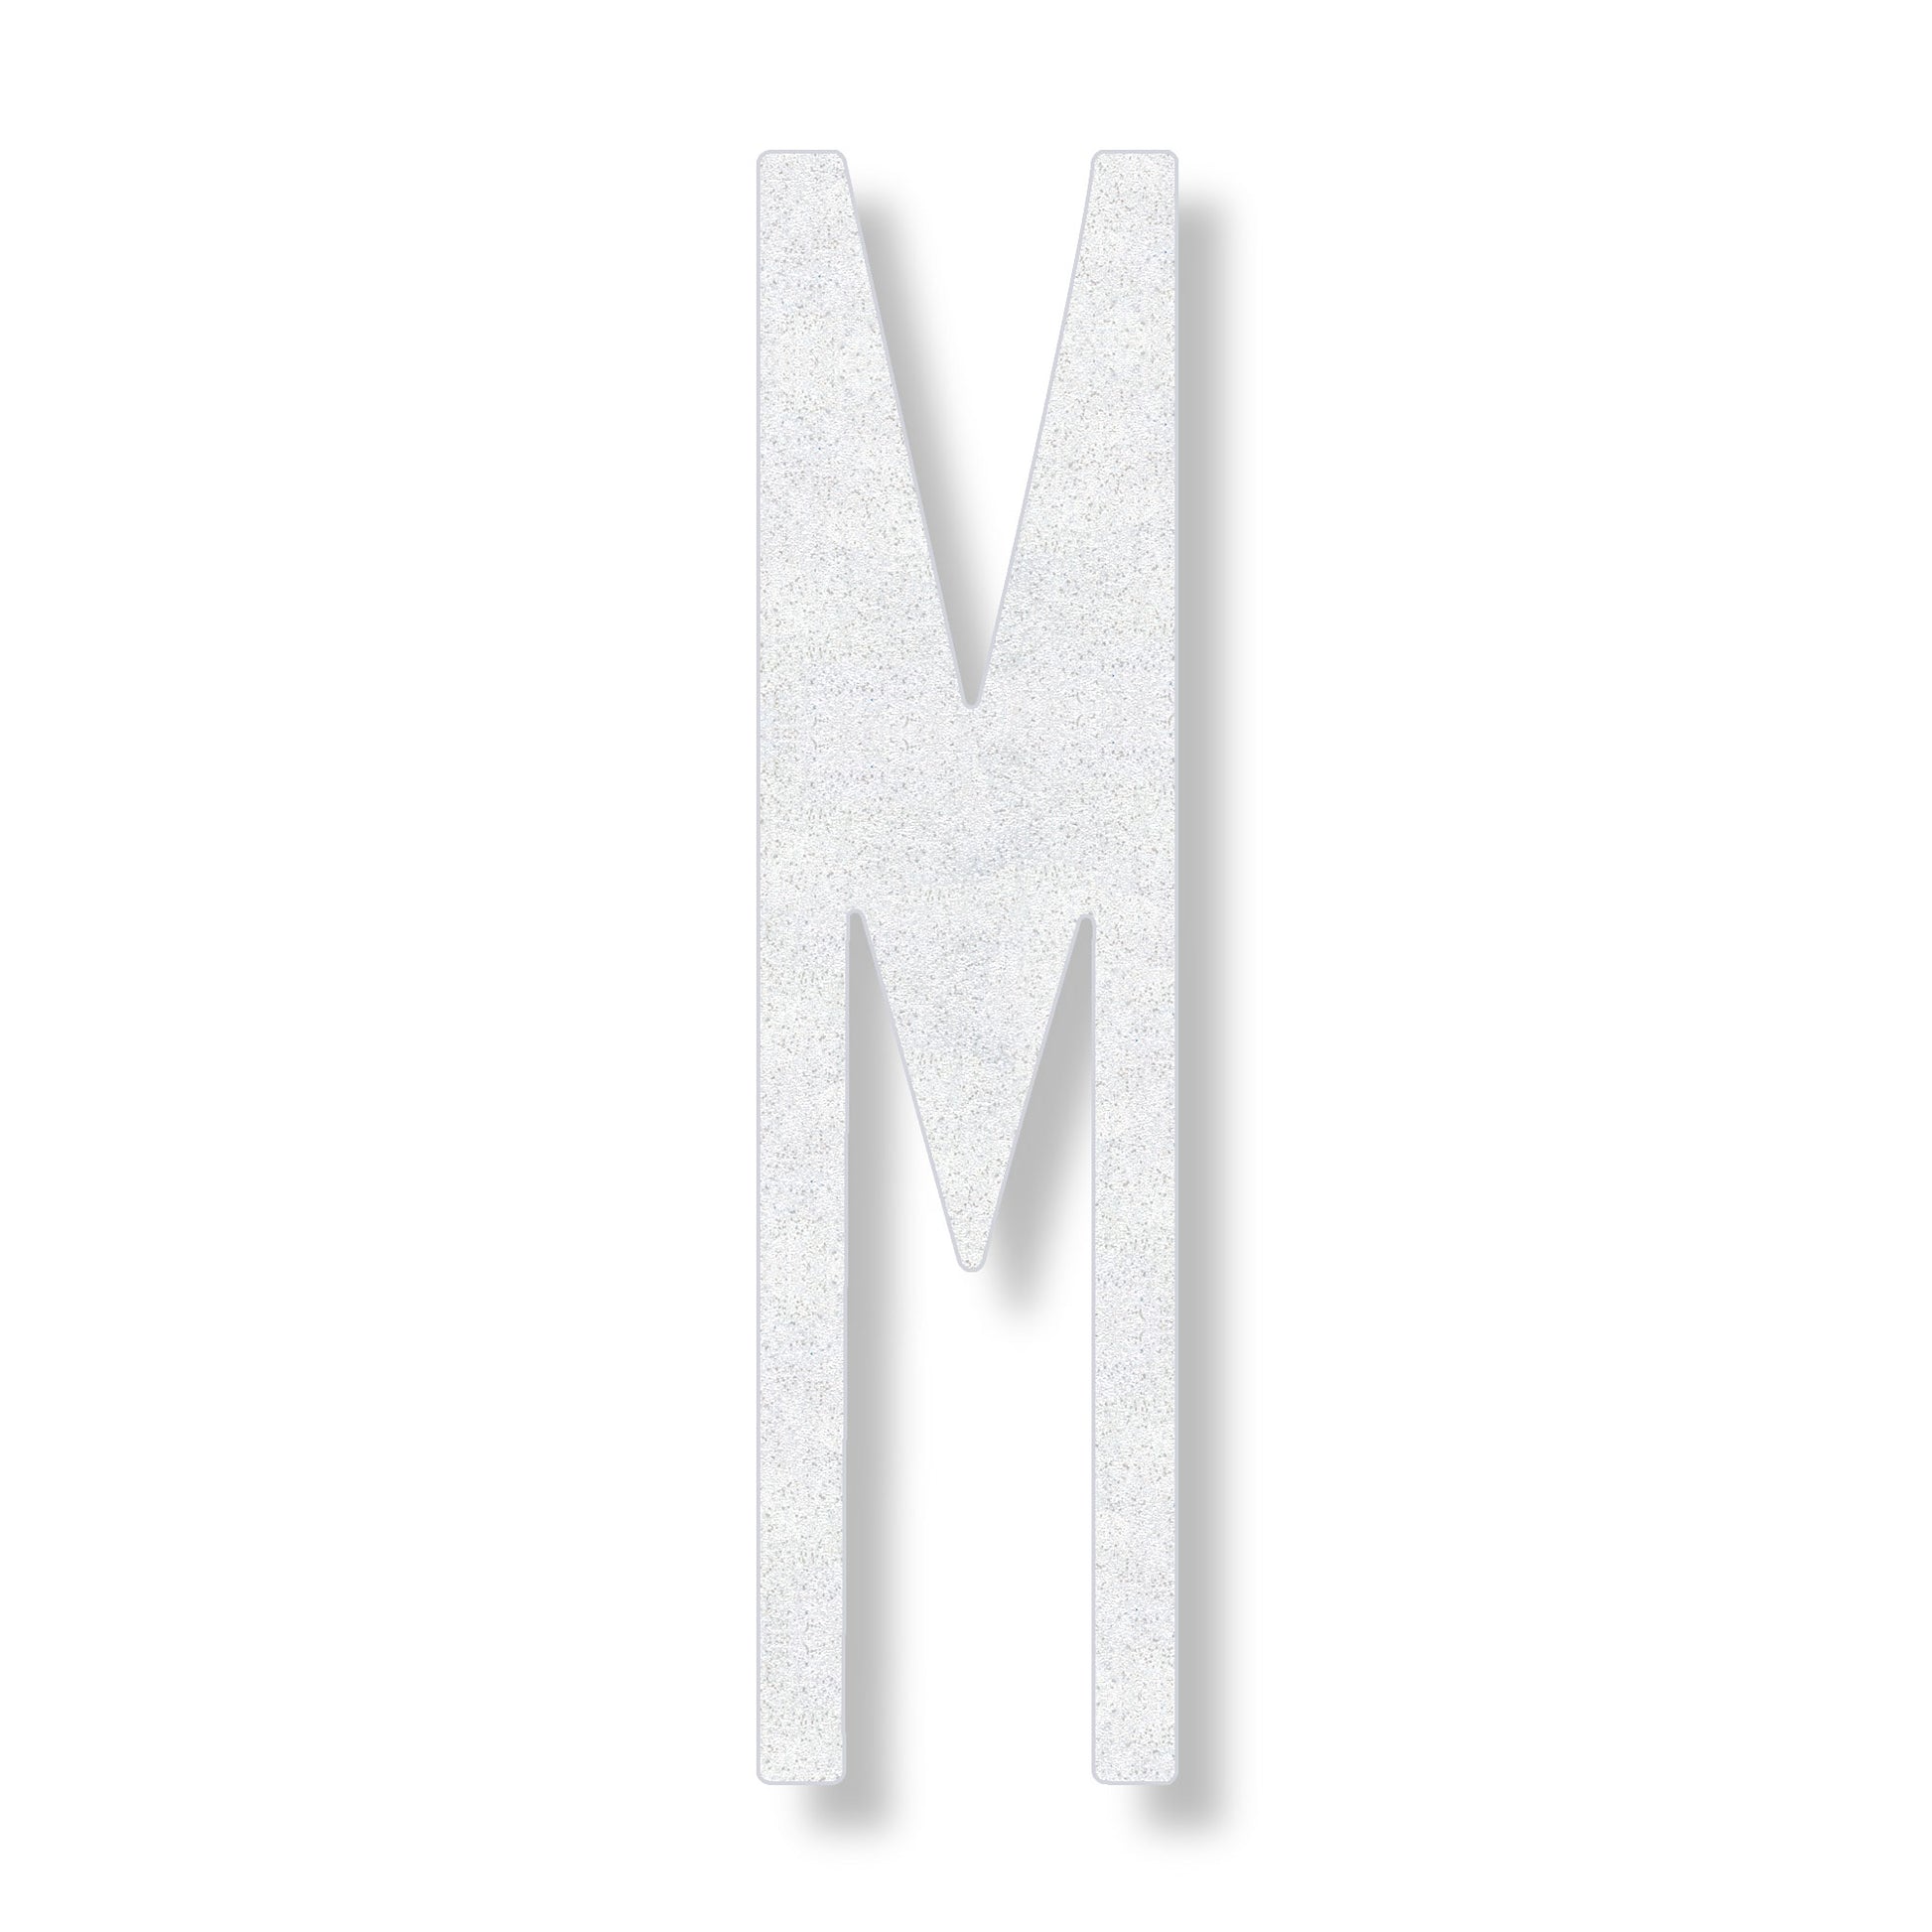 Letter M in white